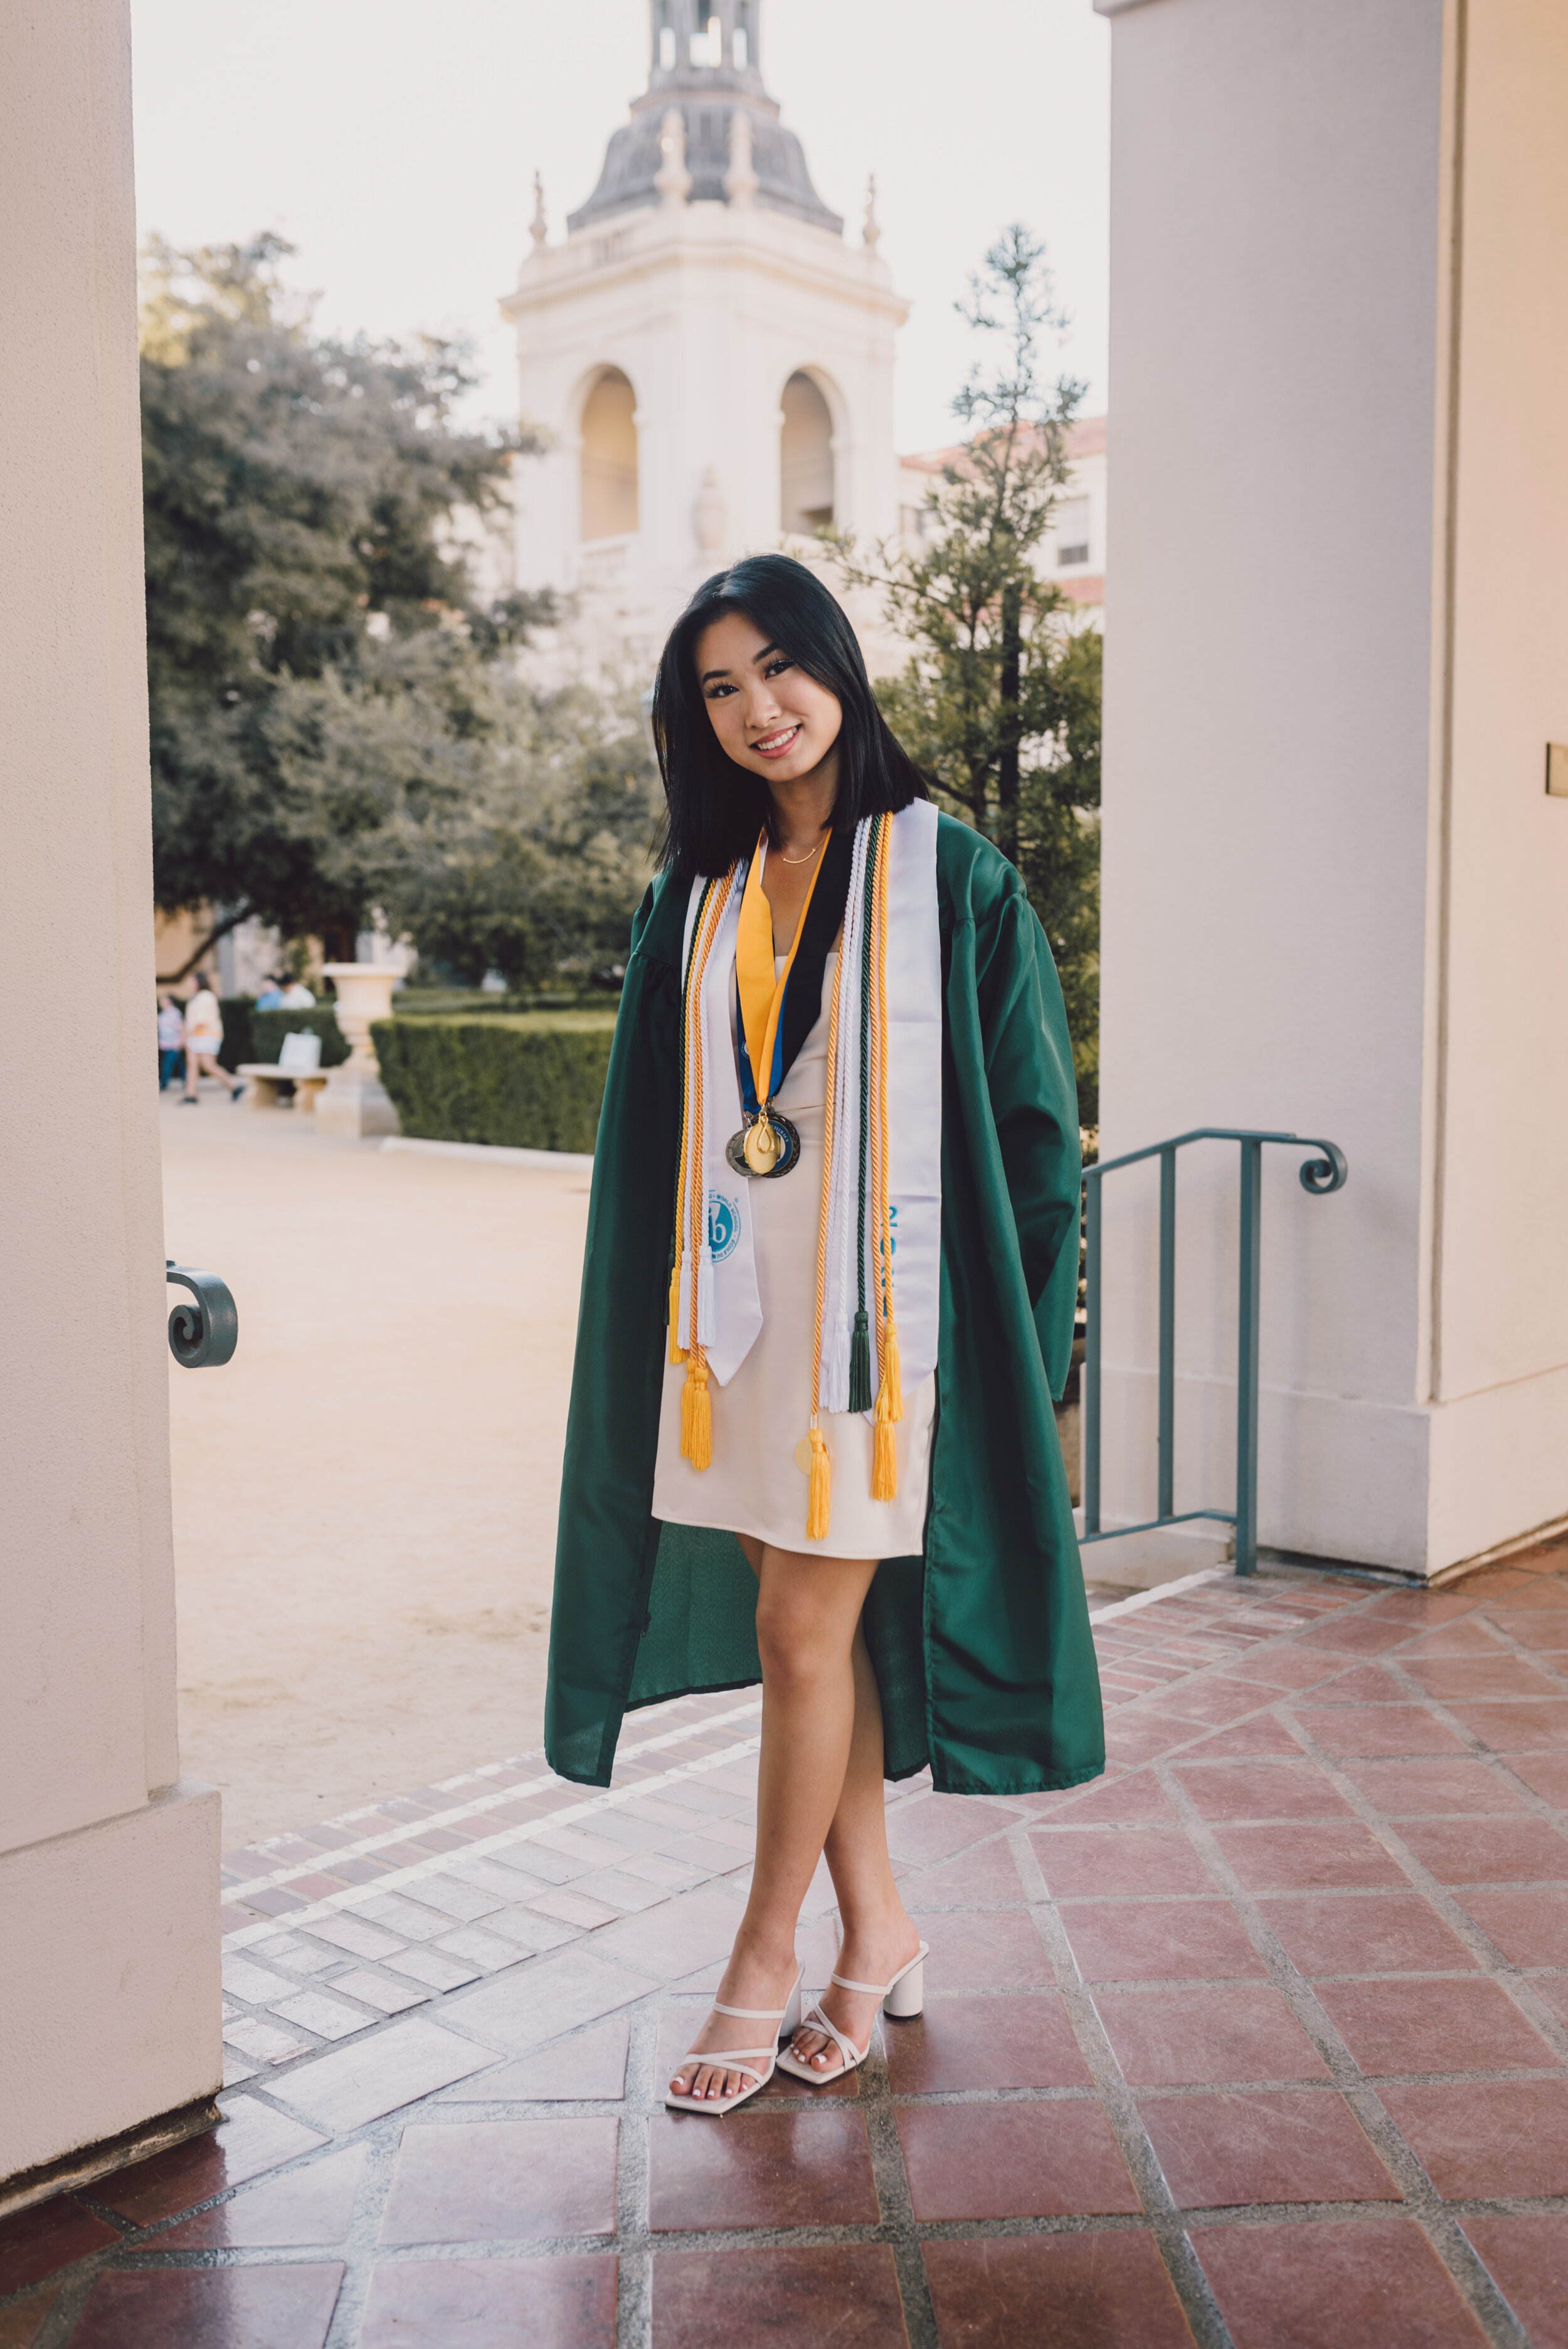 LosAngeles-Graduation-Portrait-Photographer-High-School-20.jpg